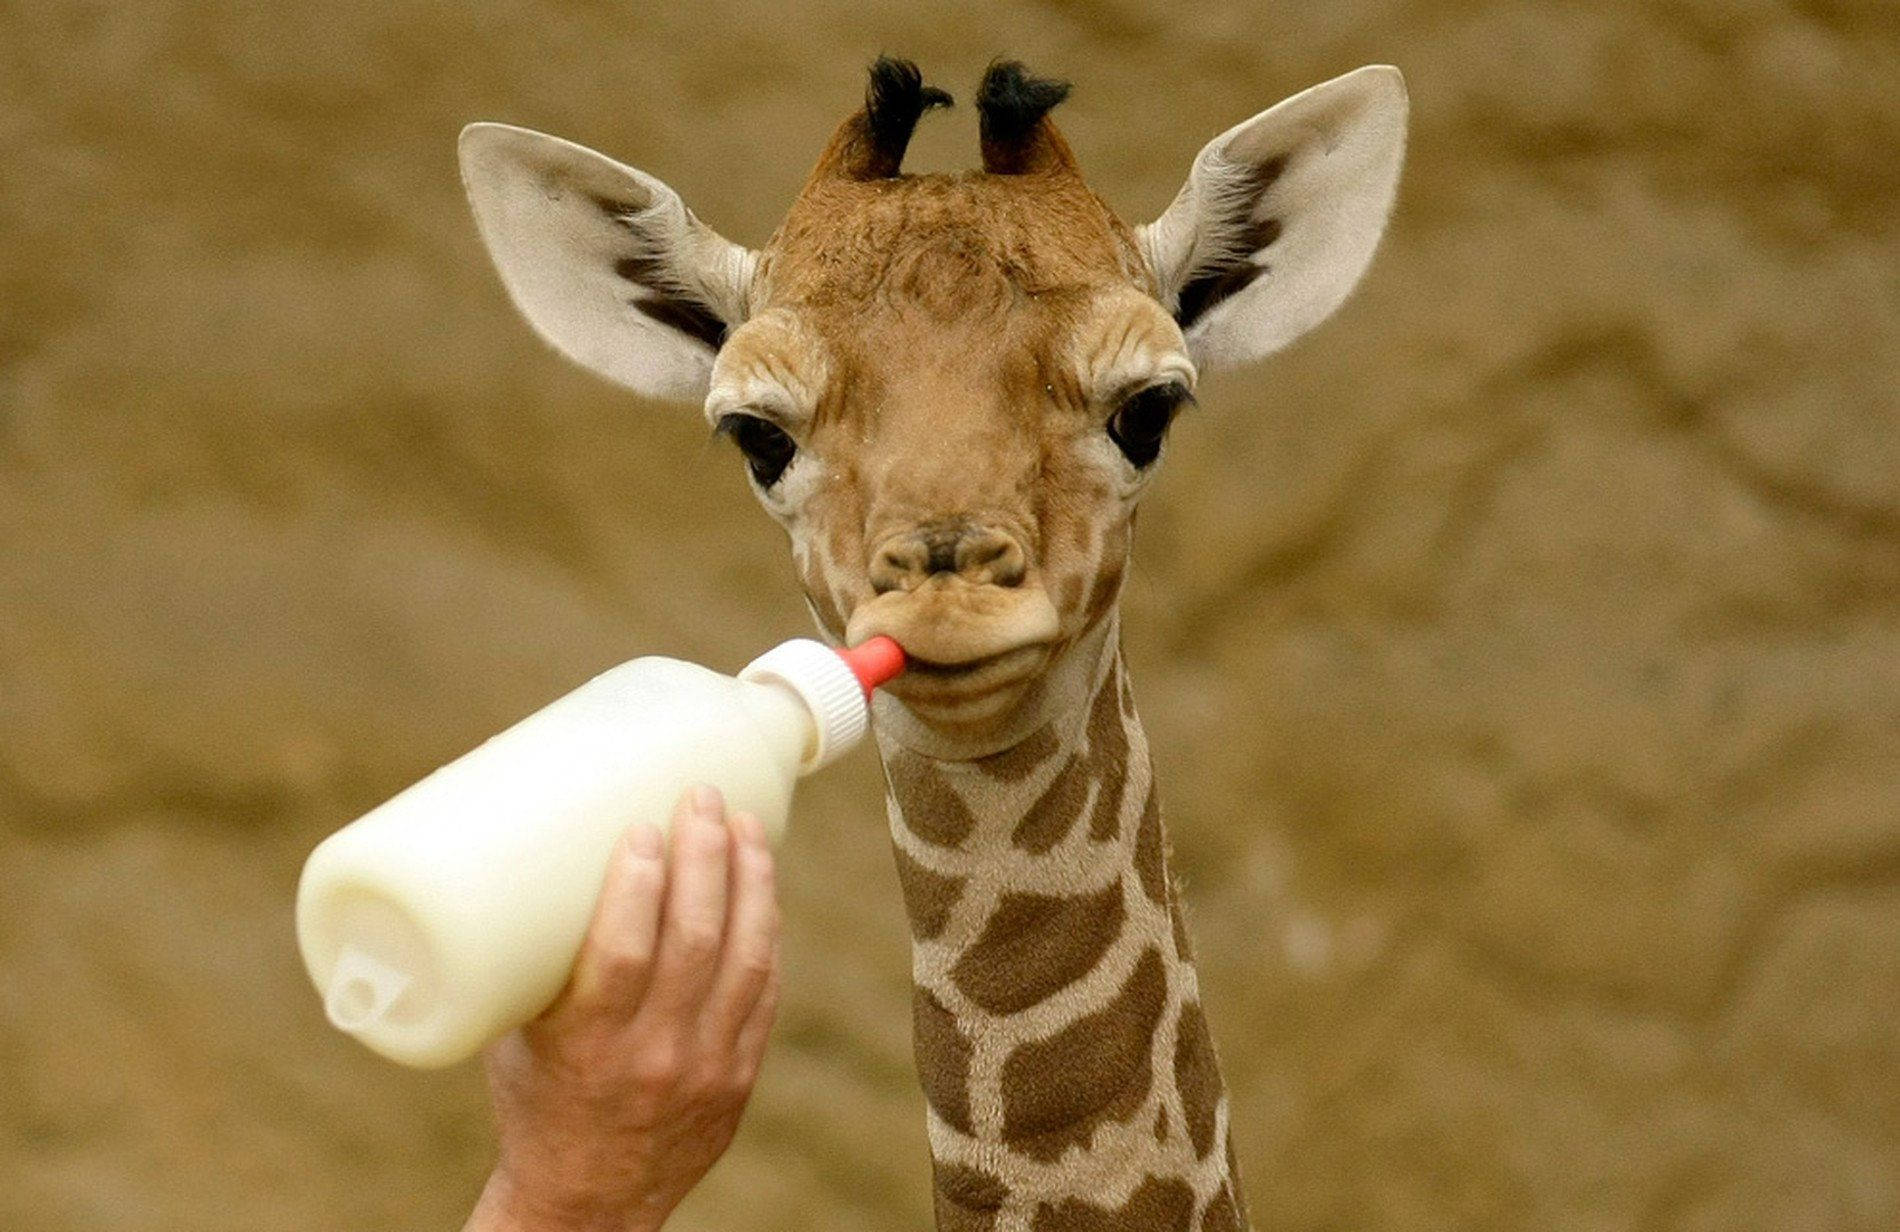 Baby Giraffe Drinking Milk